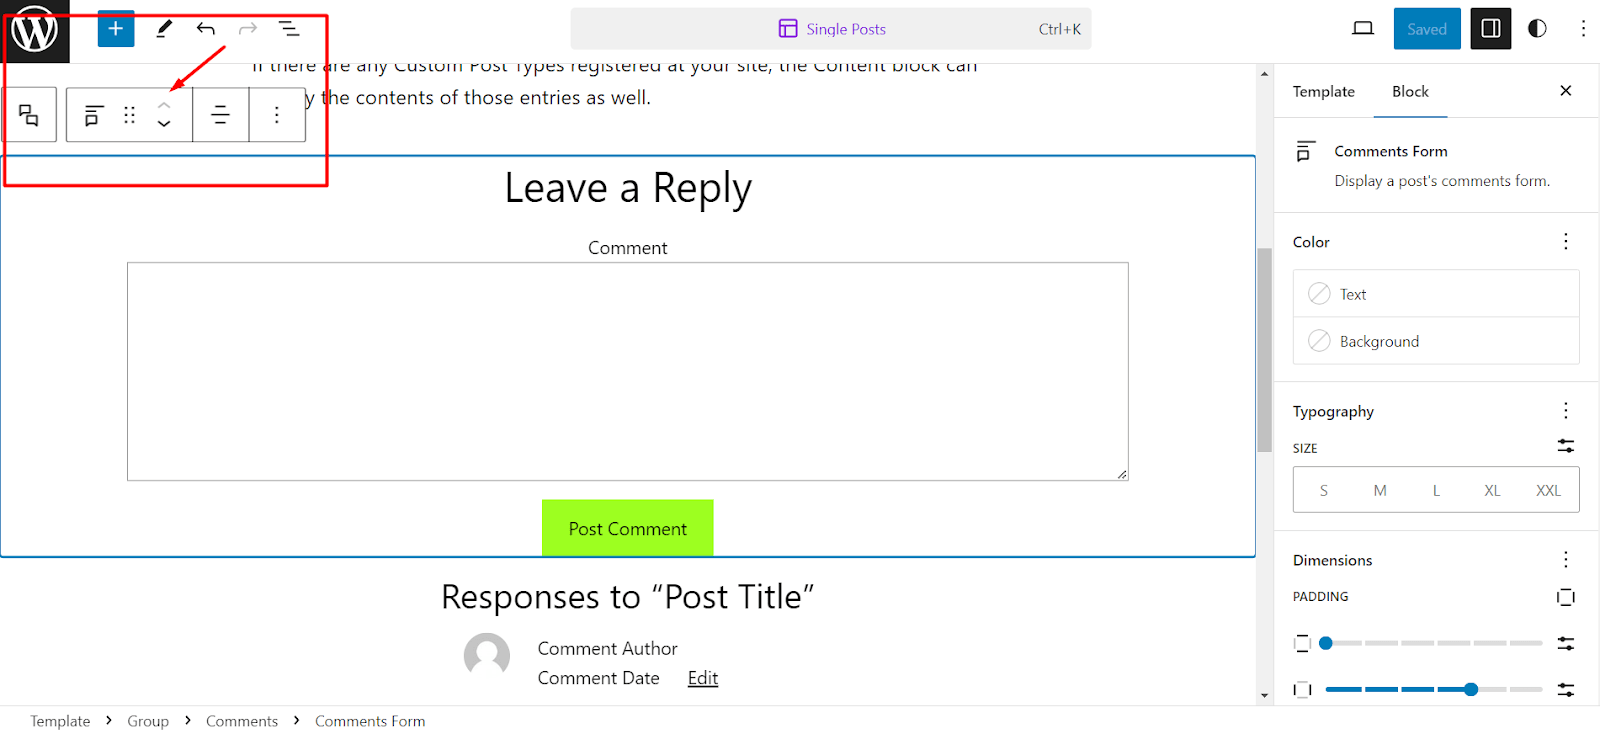 move comment form above comments